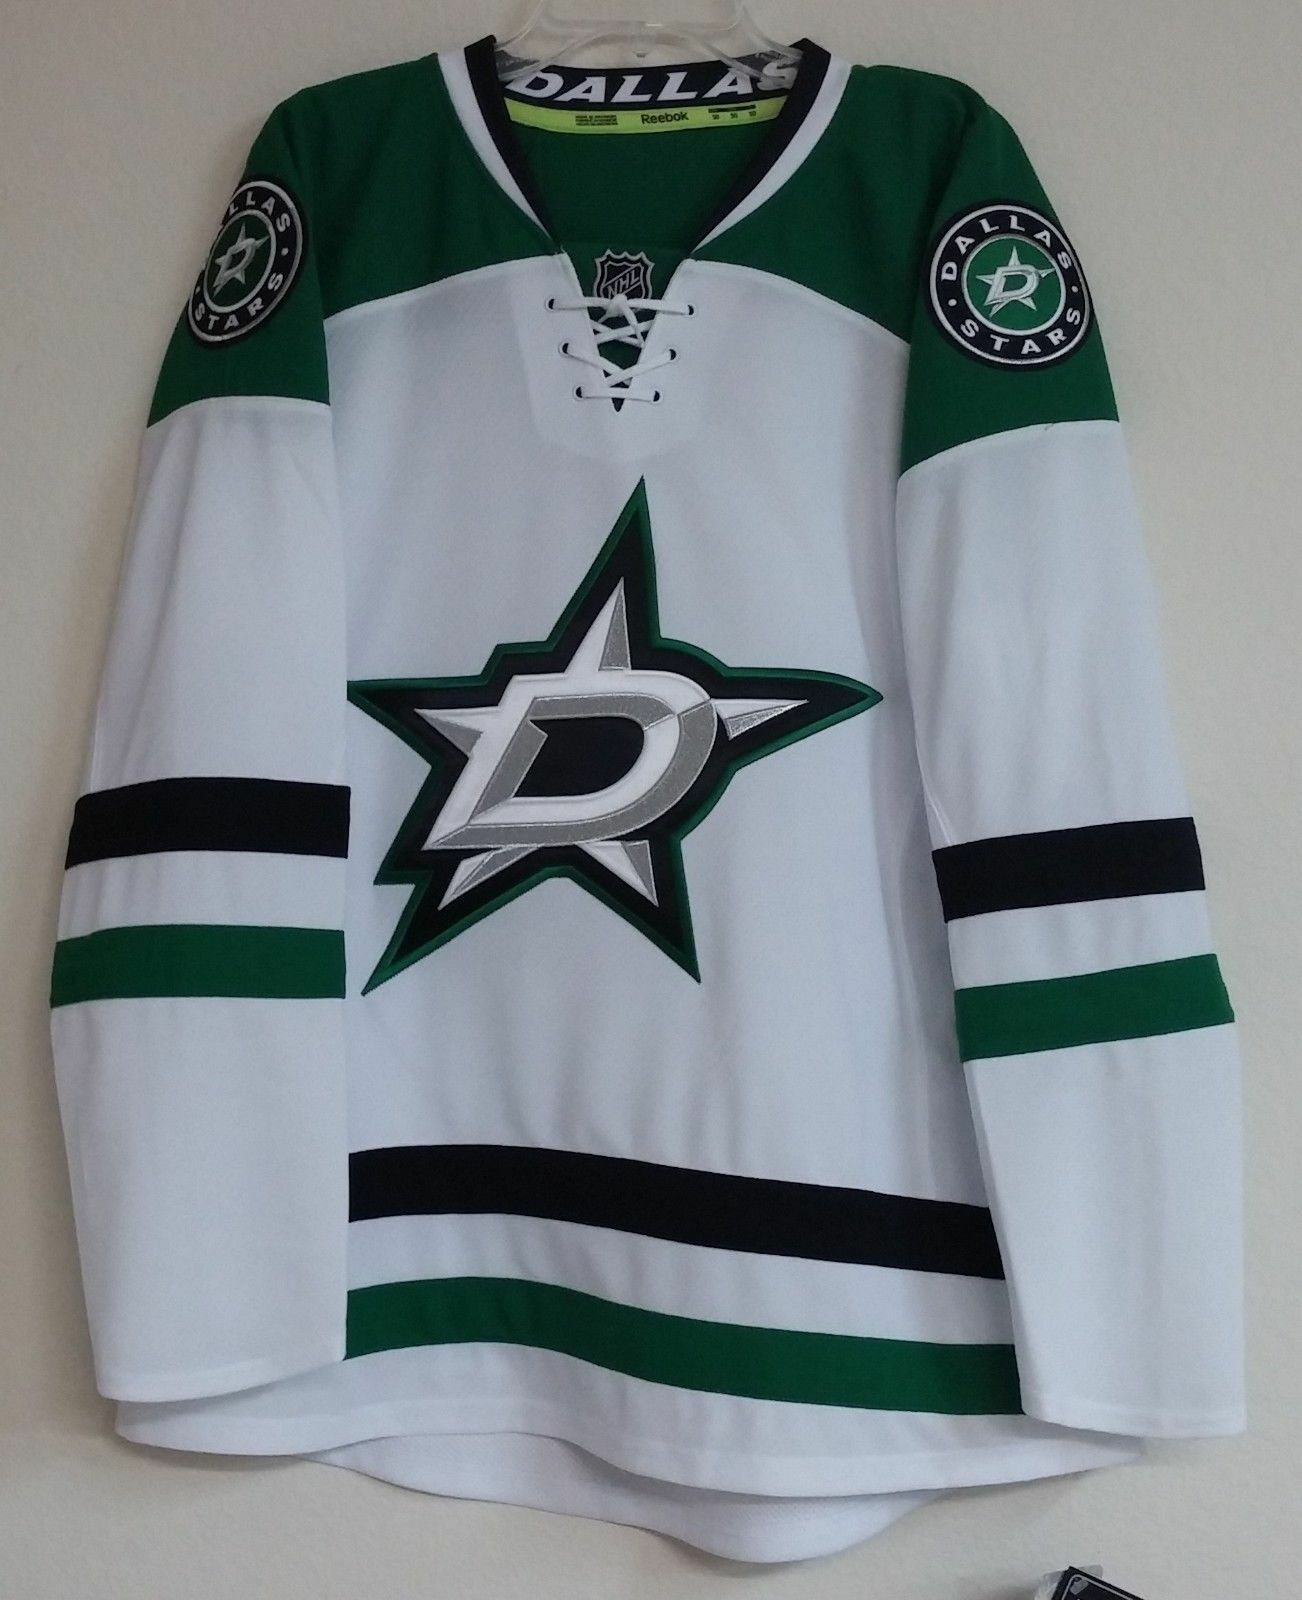 DALLAS STARS reebok NHL authentic EDGE 1.0 hockey jersey away-white size 56 NEW Image 1